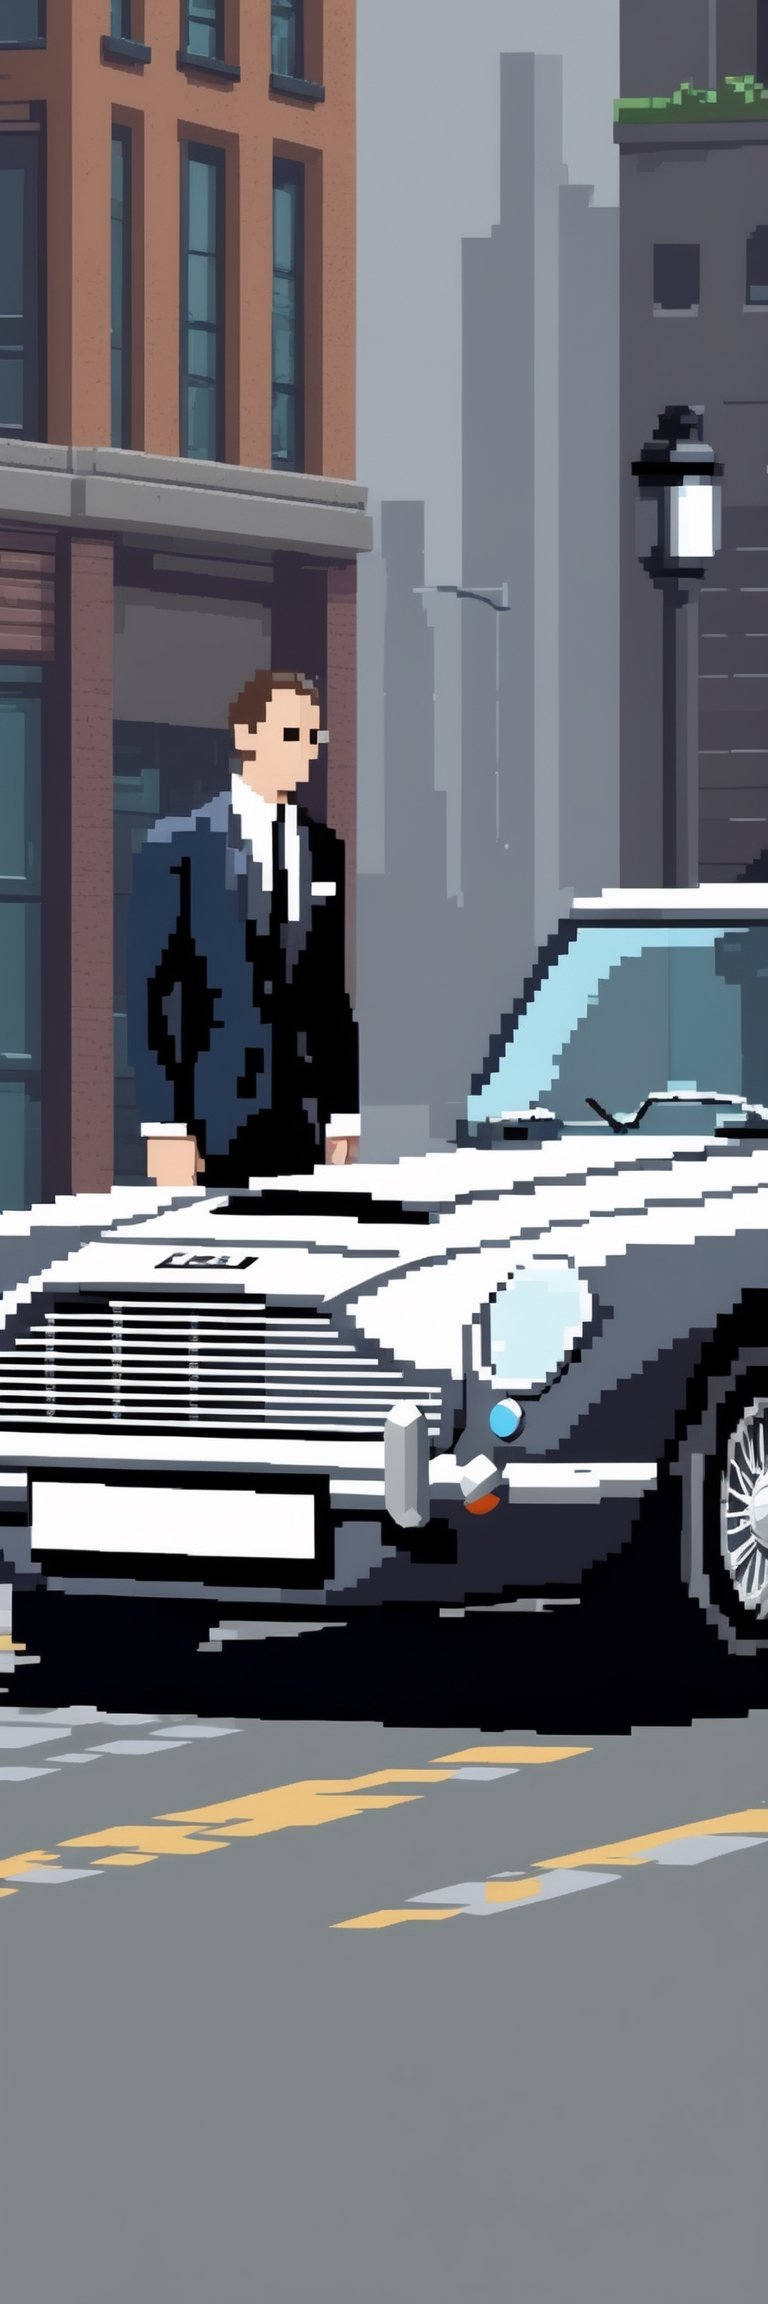 (1guy), (full body), (Pixel-Art Adventure featuring a guy: Pixelated James Bond character walking next to a grey Aston Martin, facing viewer), vibrant 8-bit environment, reminiscent of classic games.,Leonardo Style, James Bond, Aston Martin, London city, style,pixel art,pixel